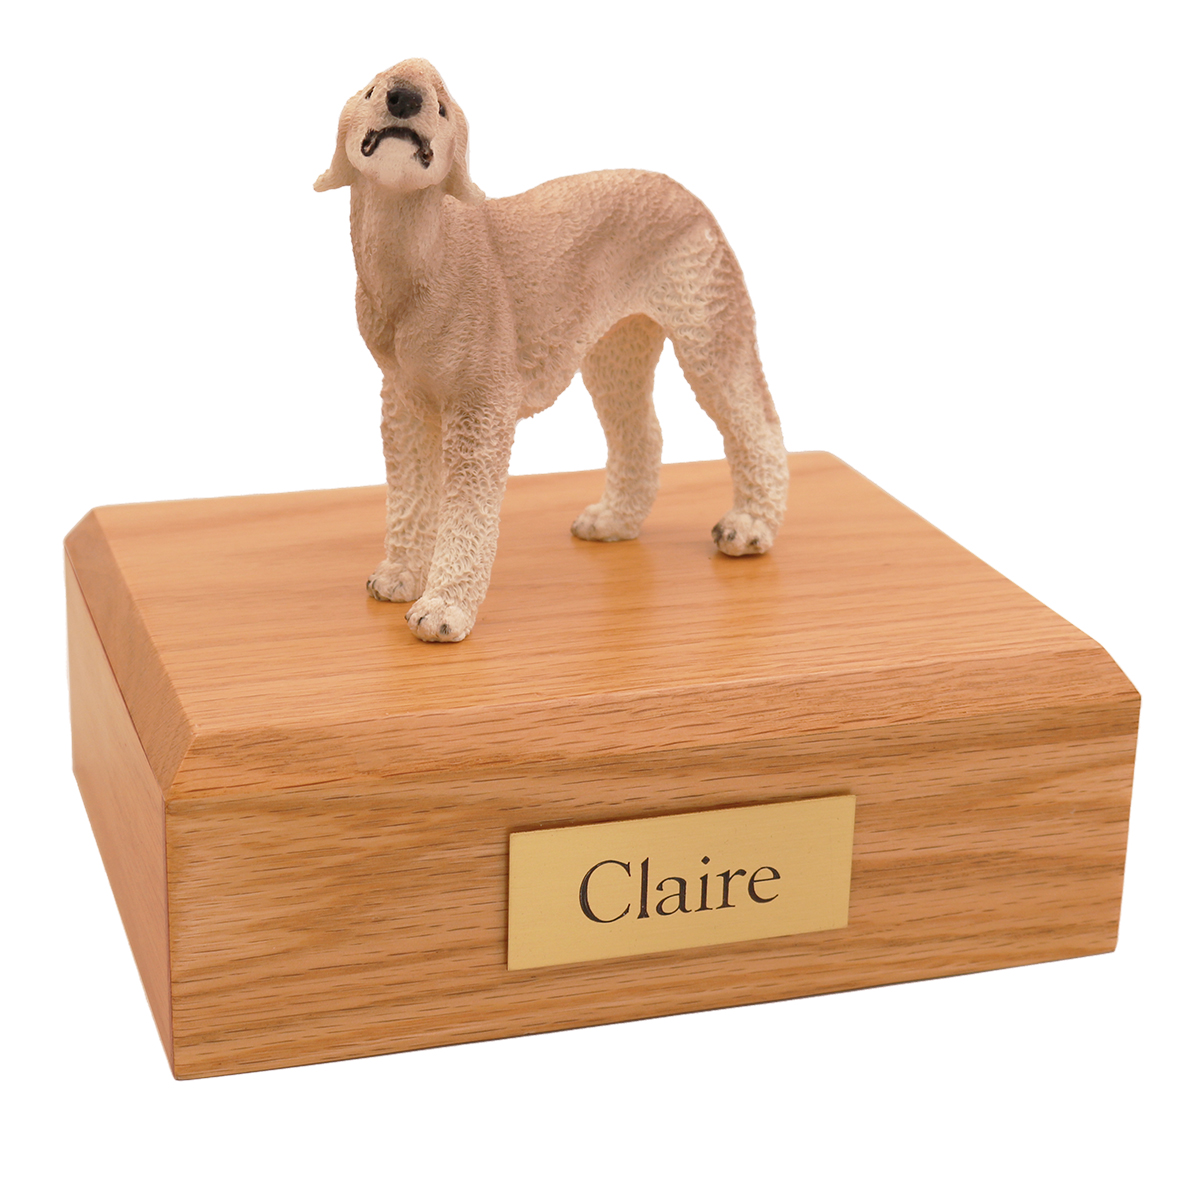 Dog, Bedlington Terrier, Tan - Figurine Urn